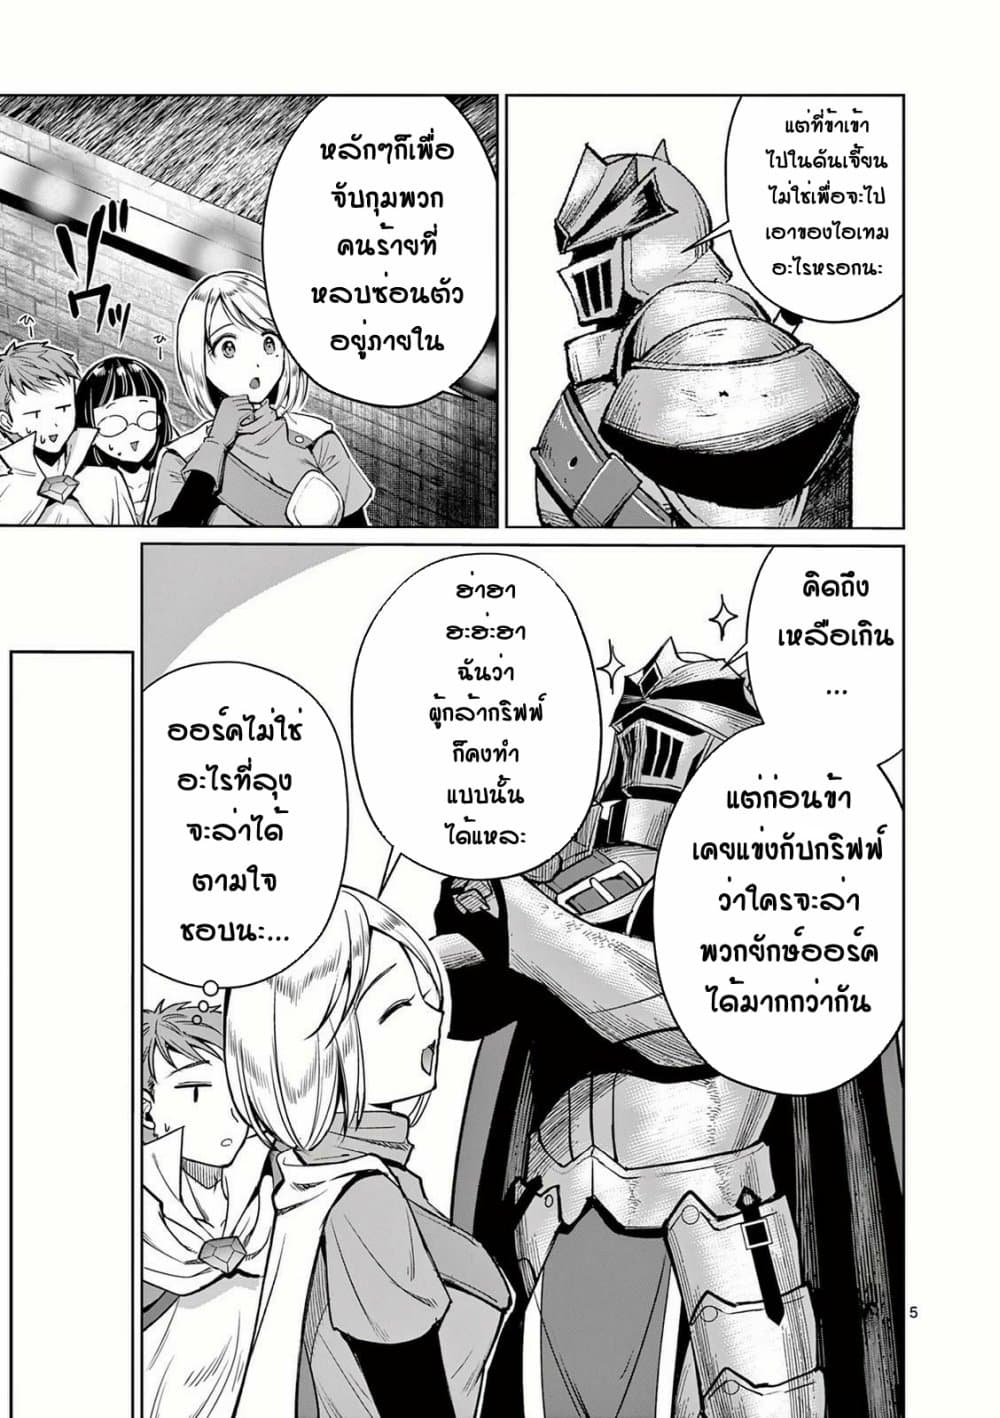 Moto Shogun no Undead Knight 8. 1 (5)